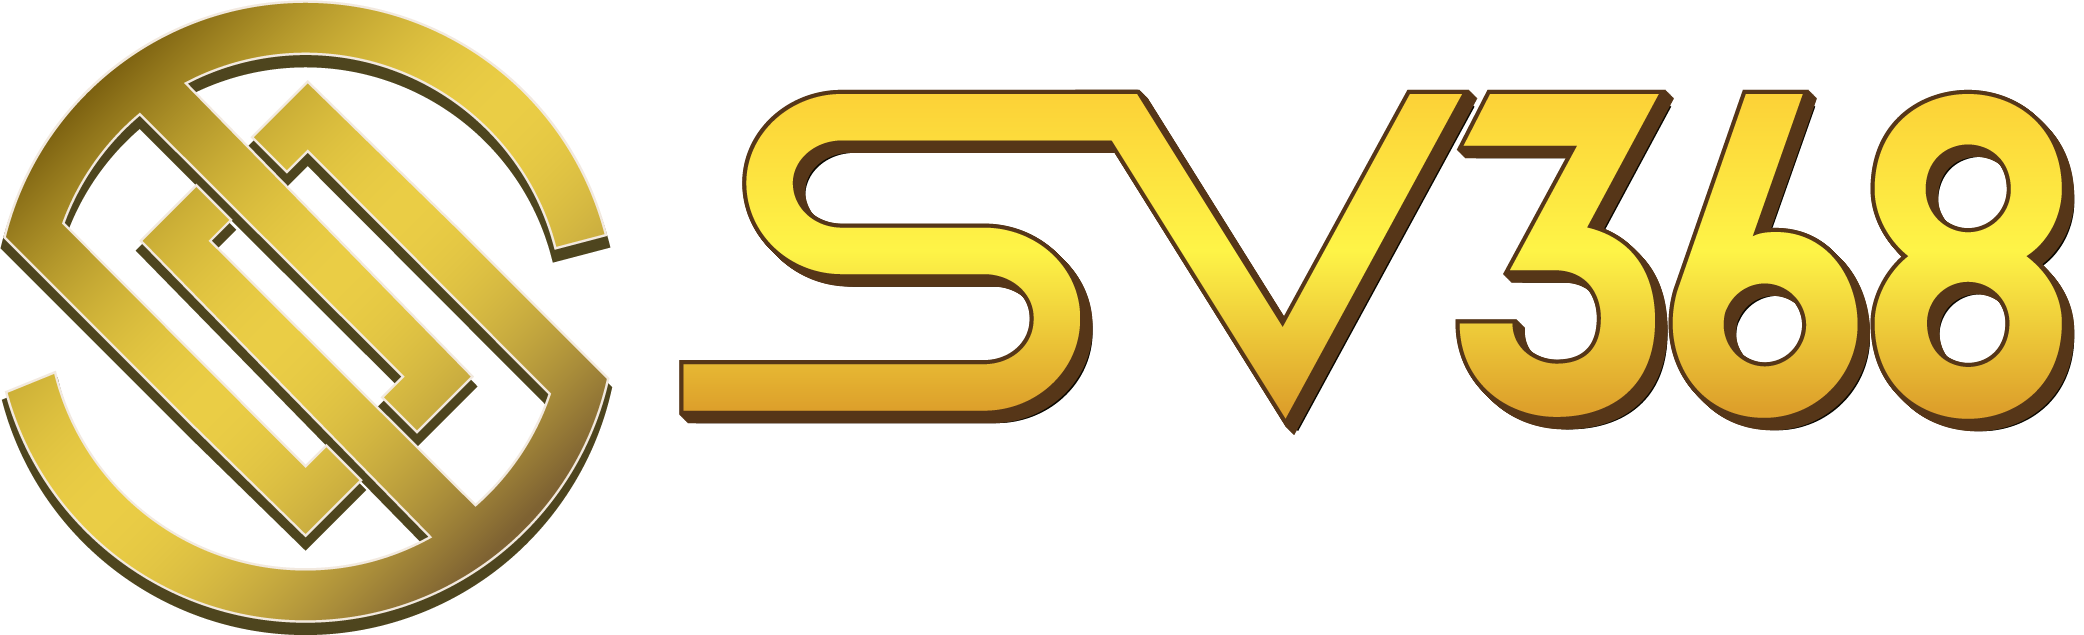 sv368ws